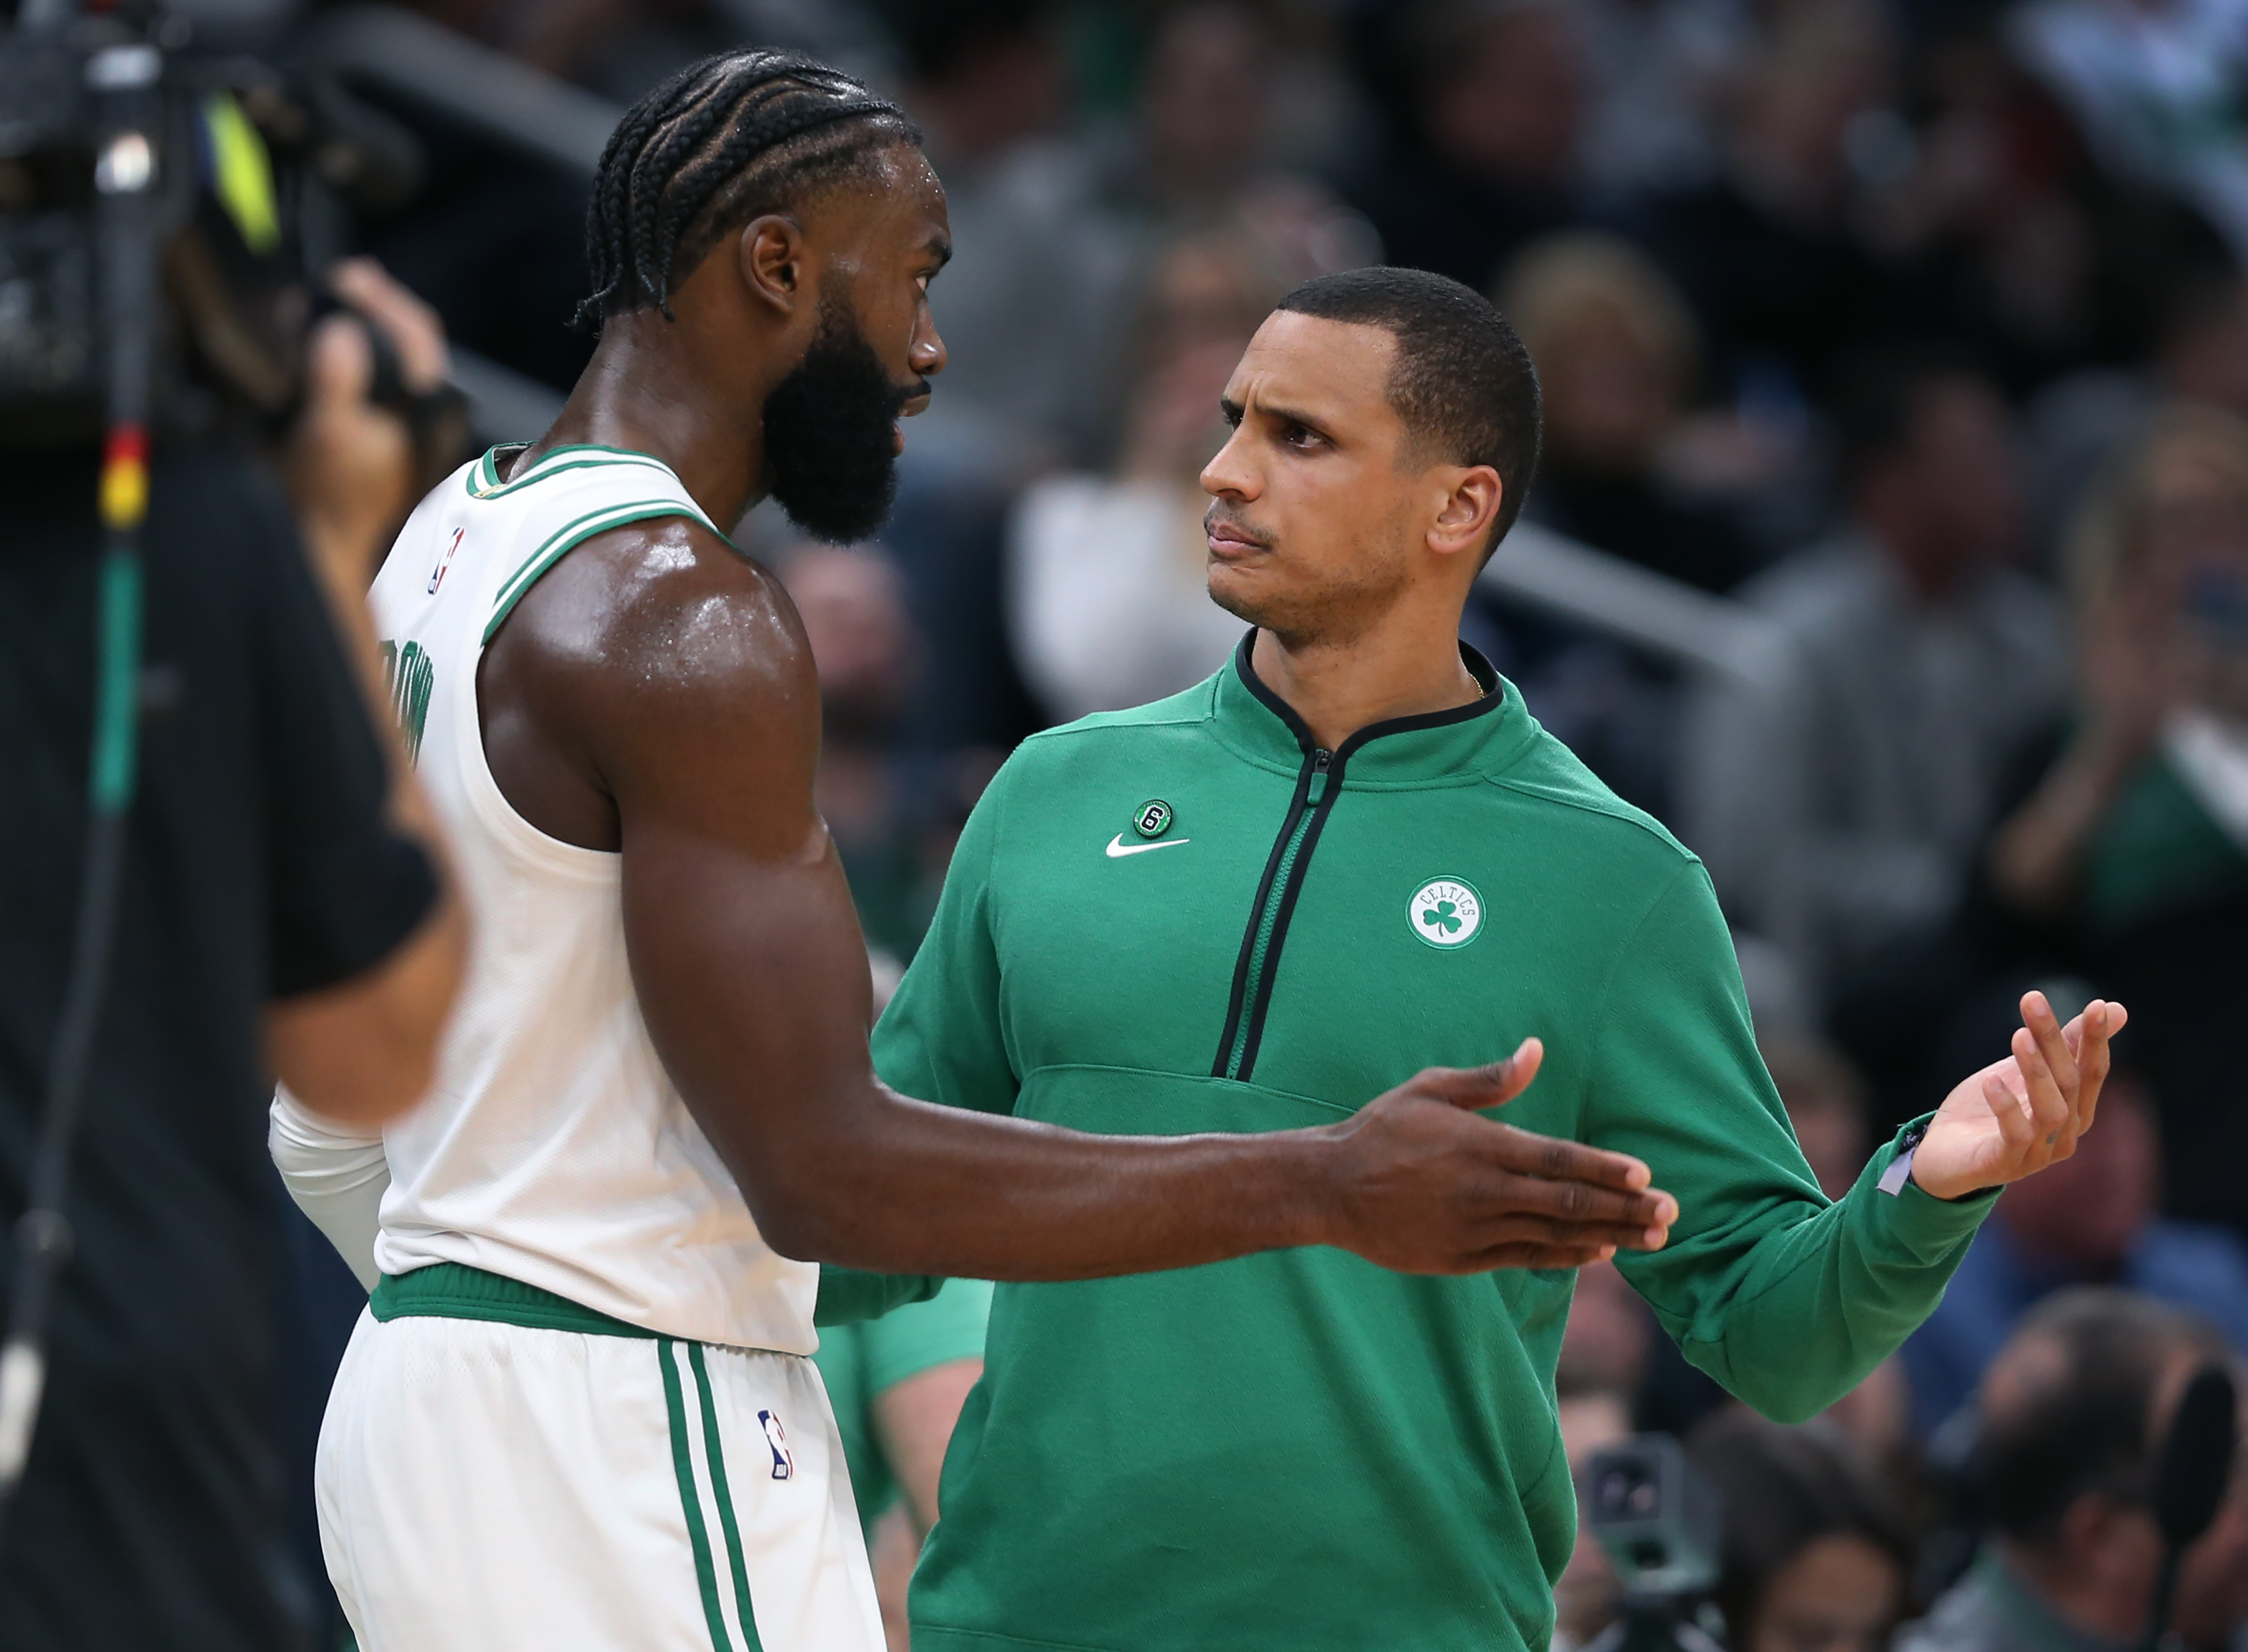 Celtics interim head coach Joe Mazzulla embracing opportunity